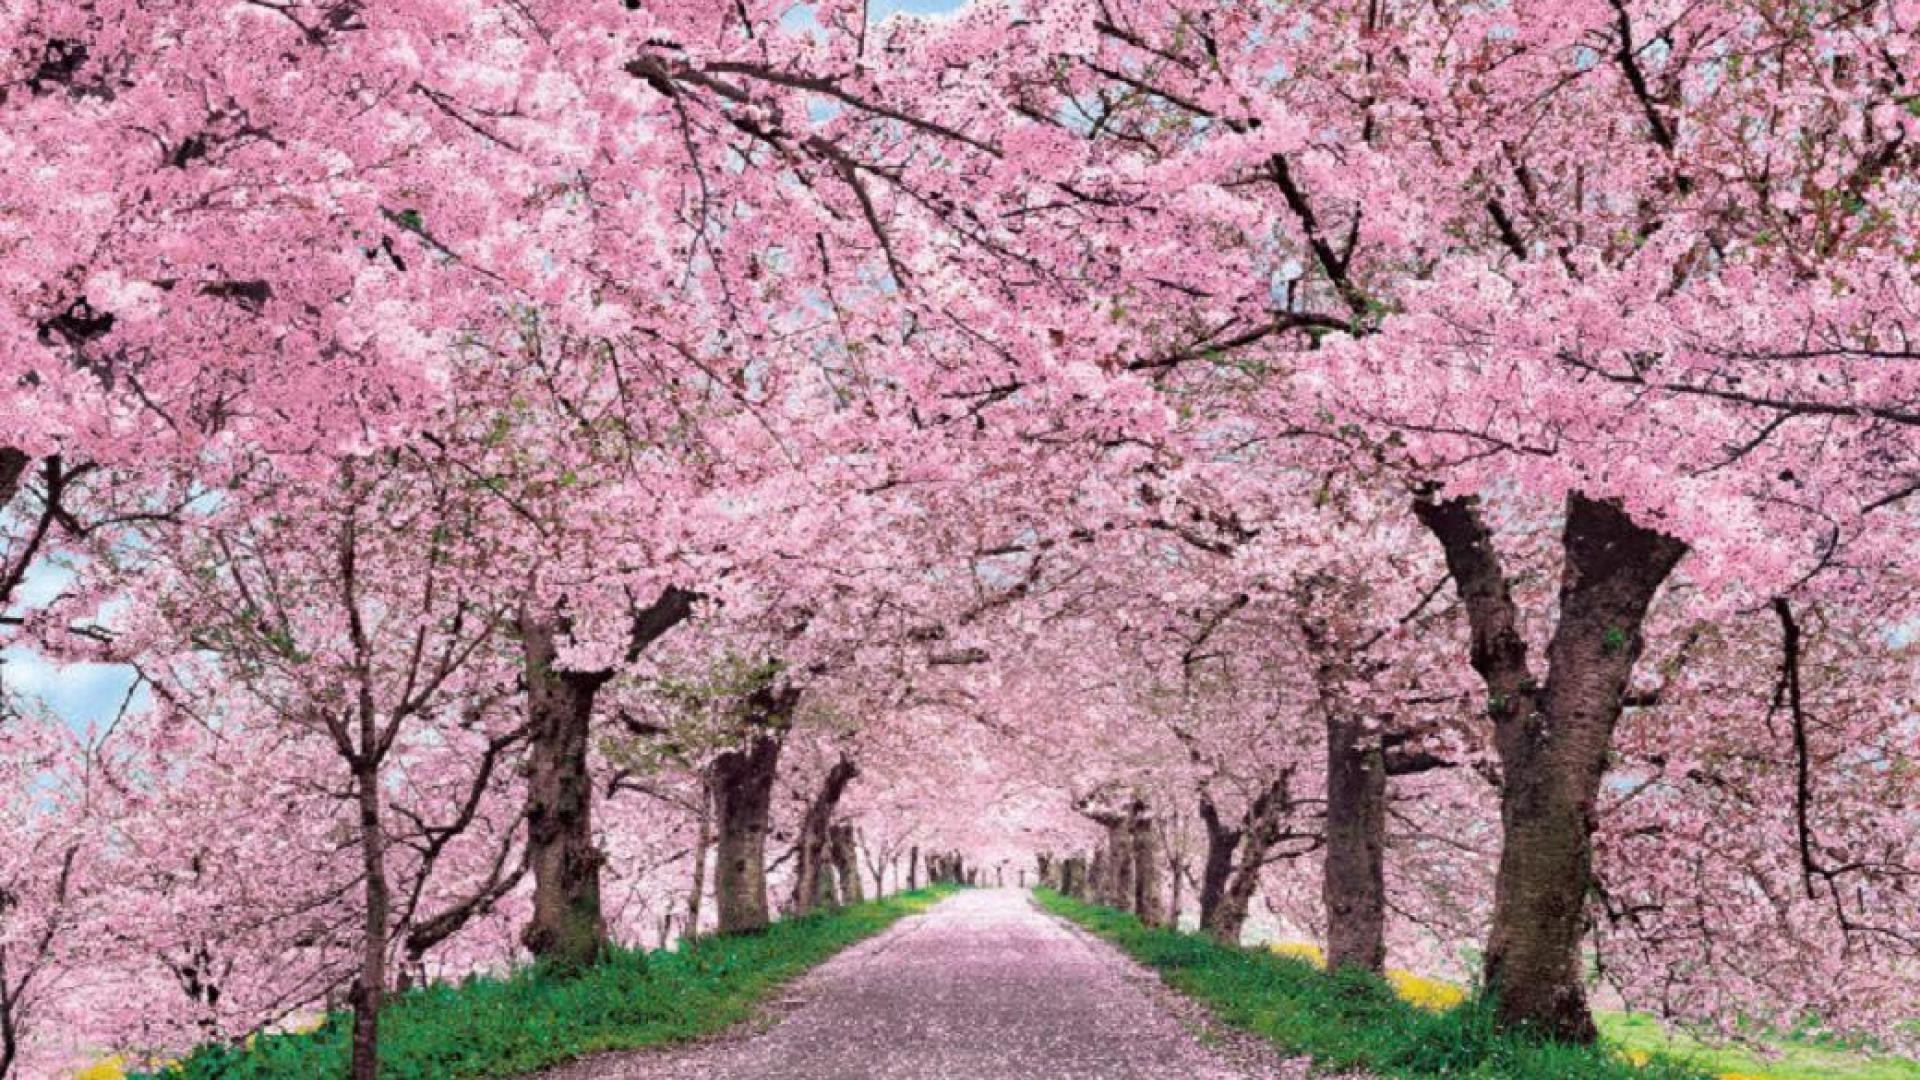 1920x1080 cherry blossom desktop wallpaper JPG 618 kB Gallery HD Wallpaper